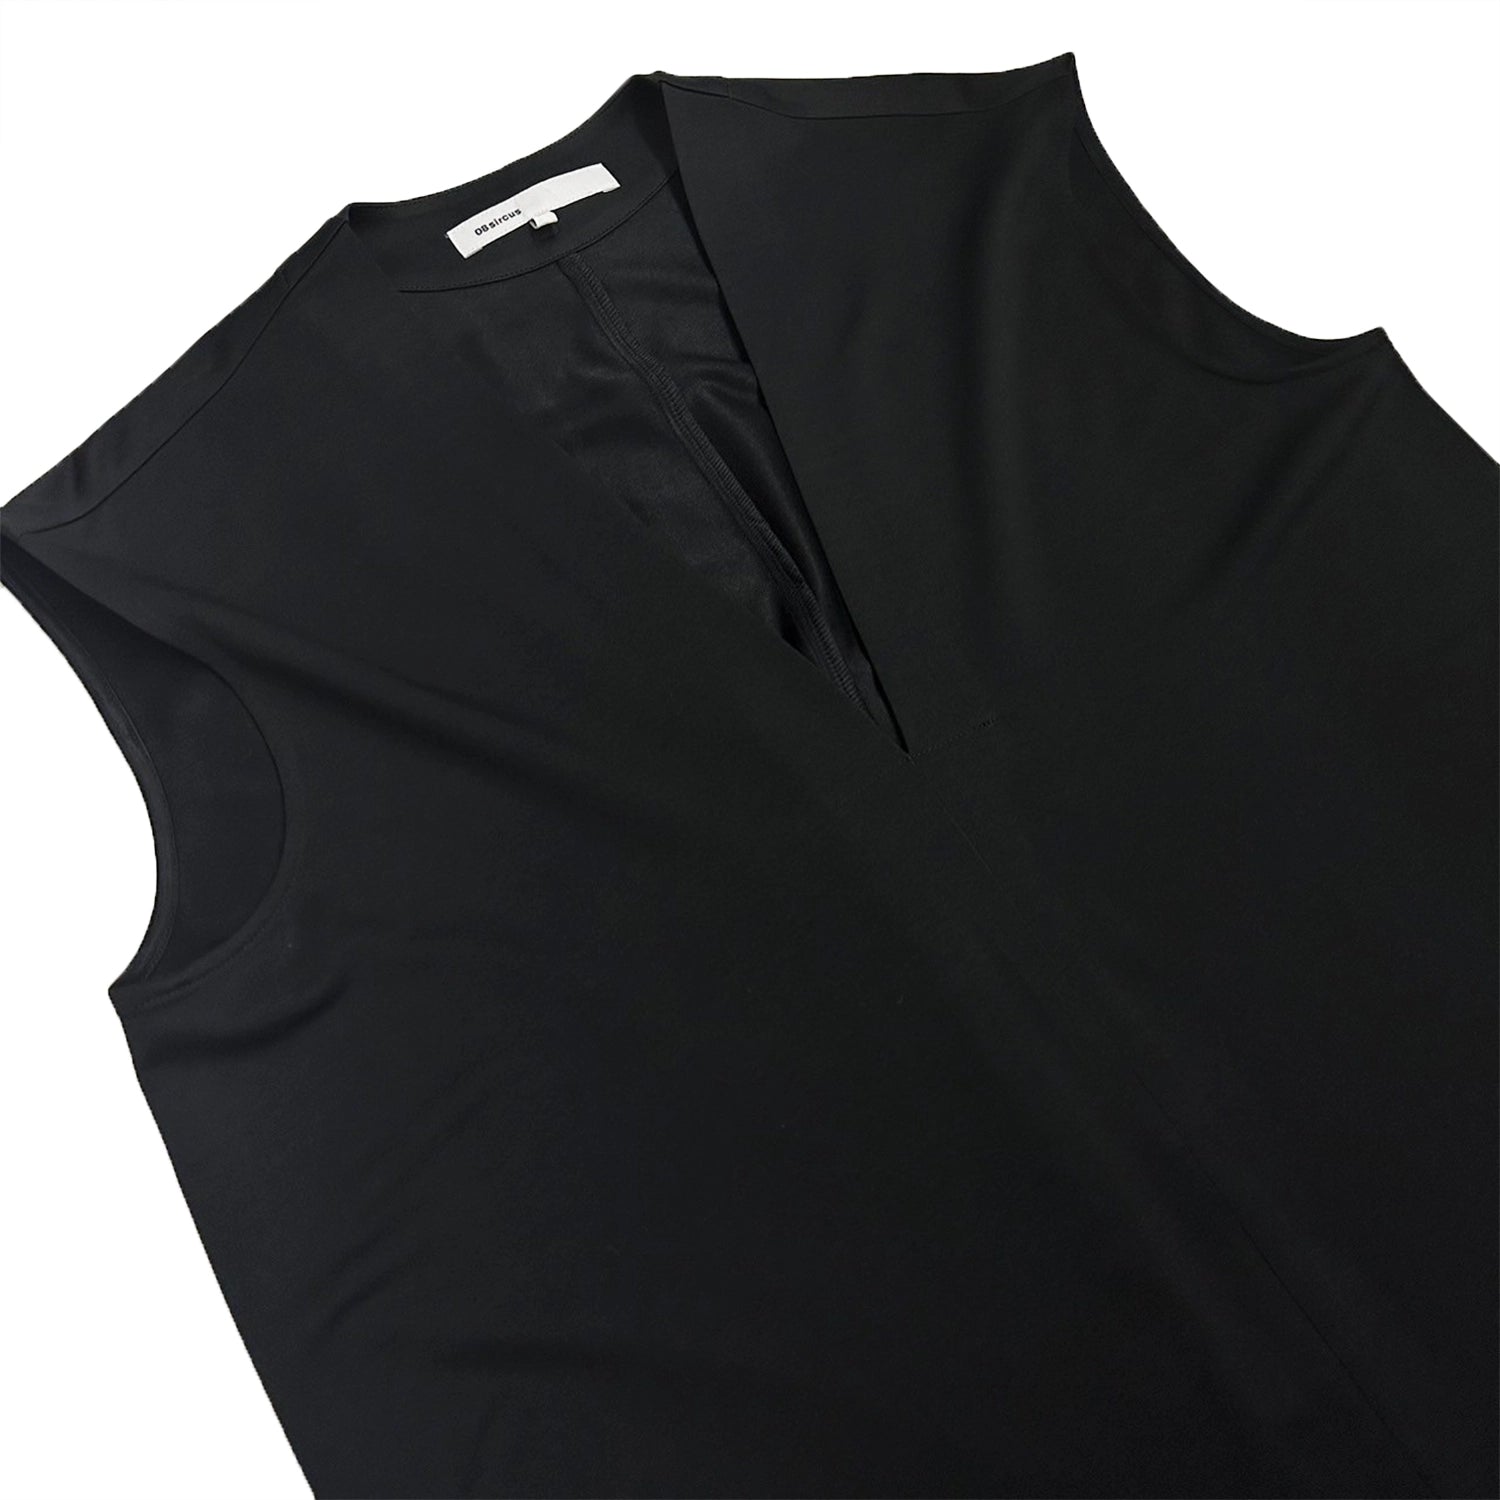 08sircus / Cupro jersey v-neck sleeveless dress